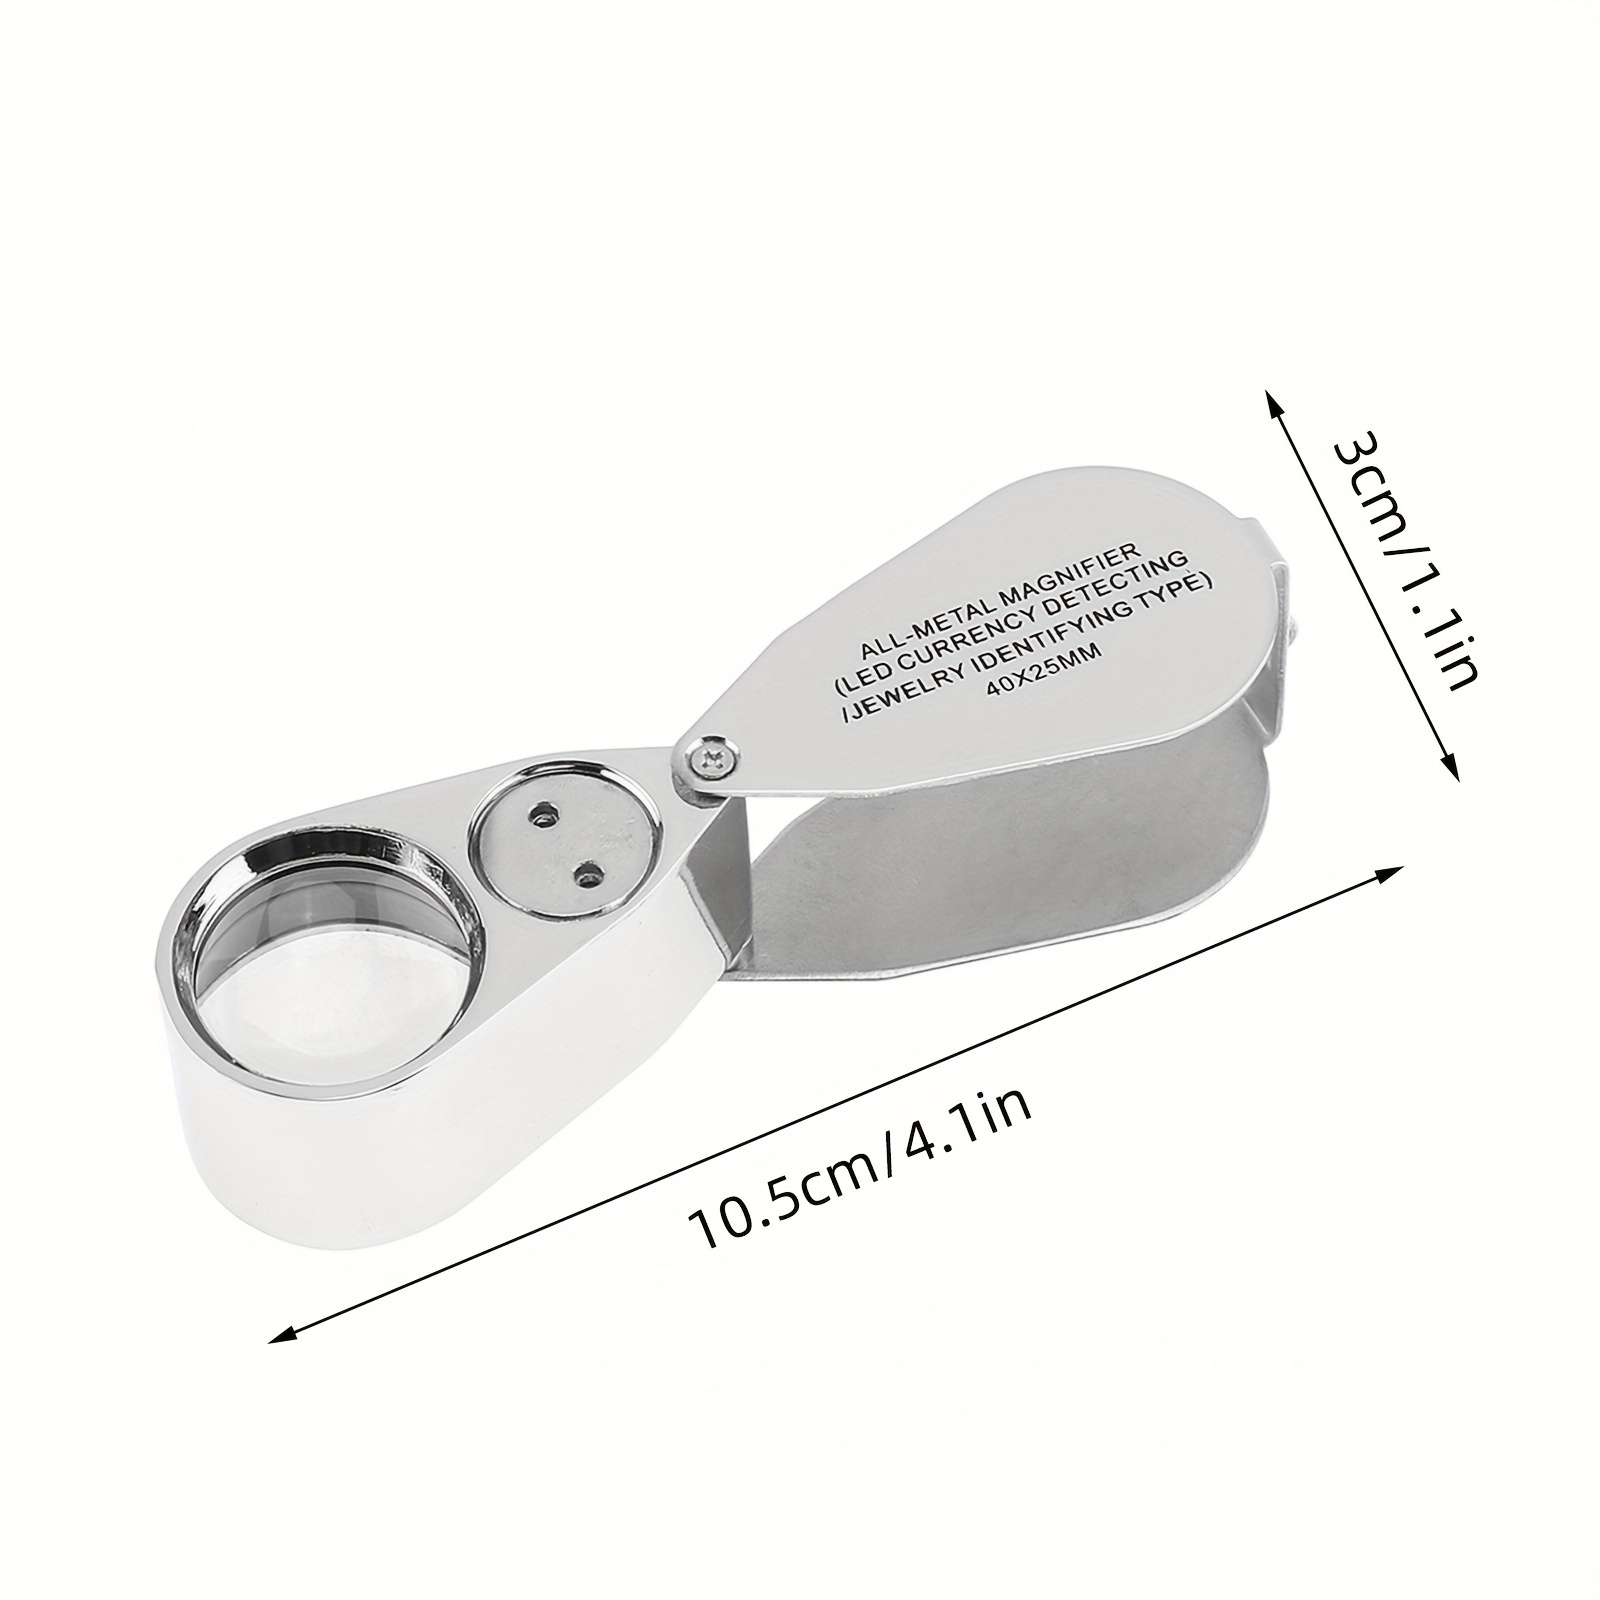 40X Full Metal Jewelry Loop Magnifier, Pocket Jewelers Eye Loupe